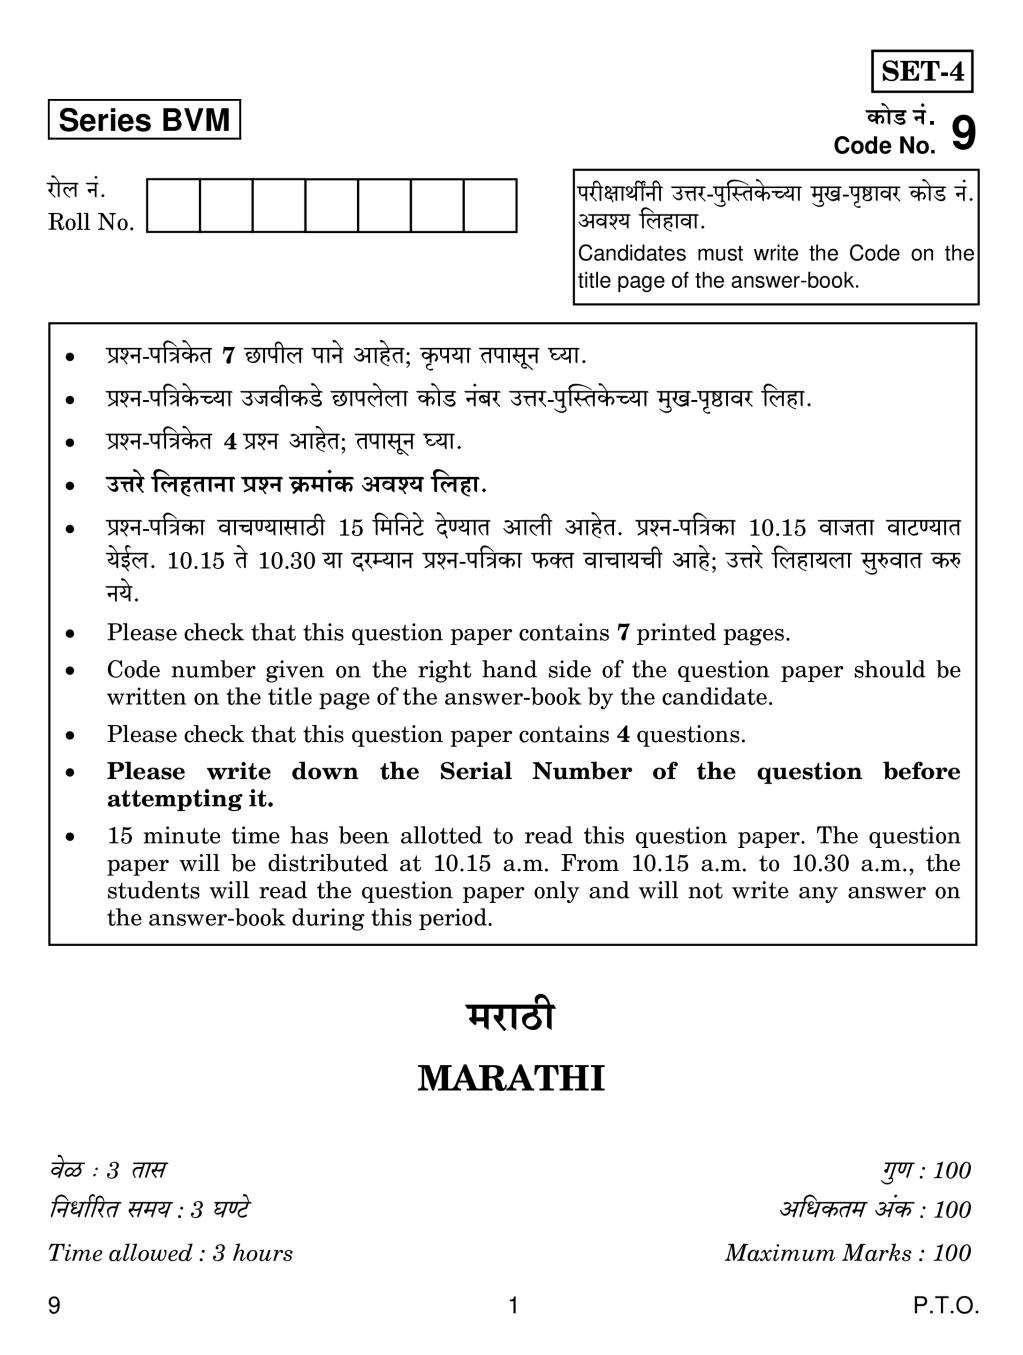 CBSE Class 12 Marathi Question Paper 2019 - Page 1